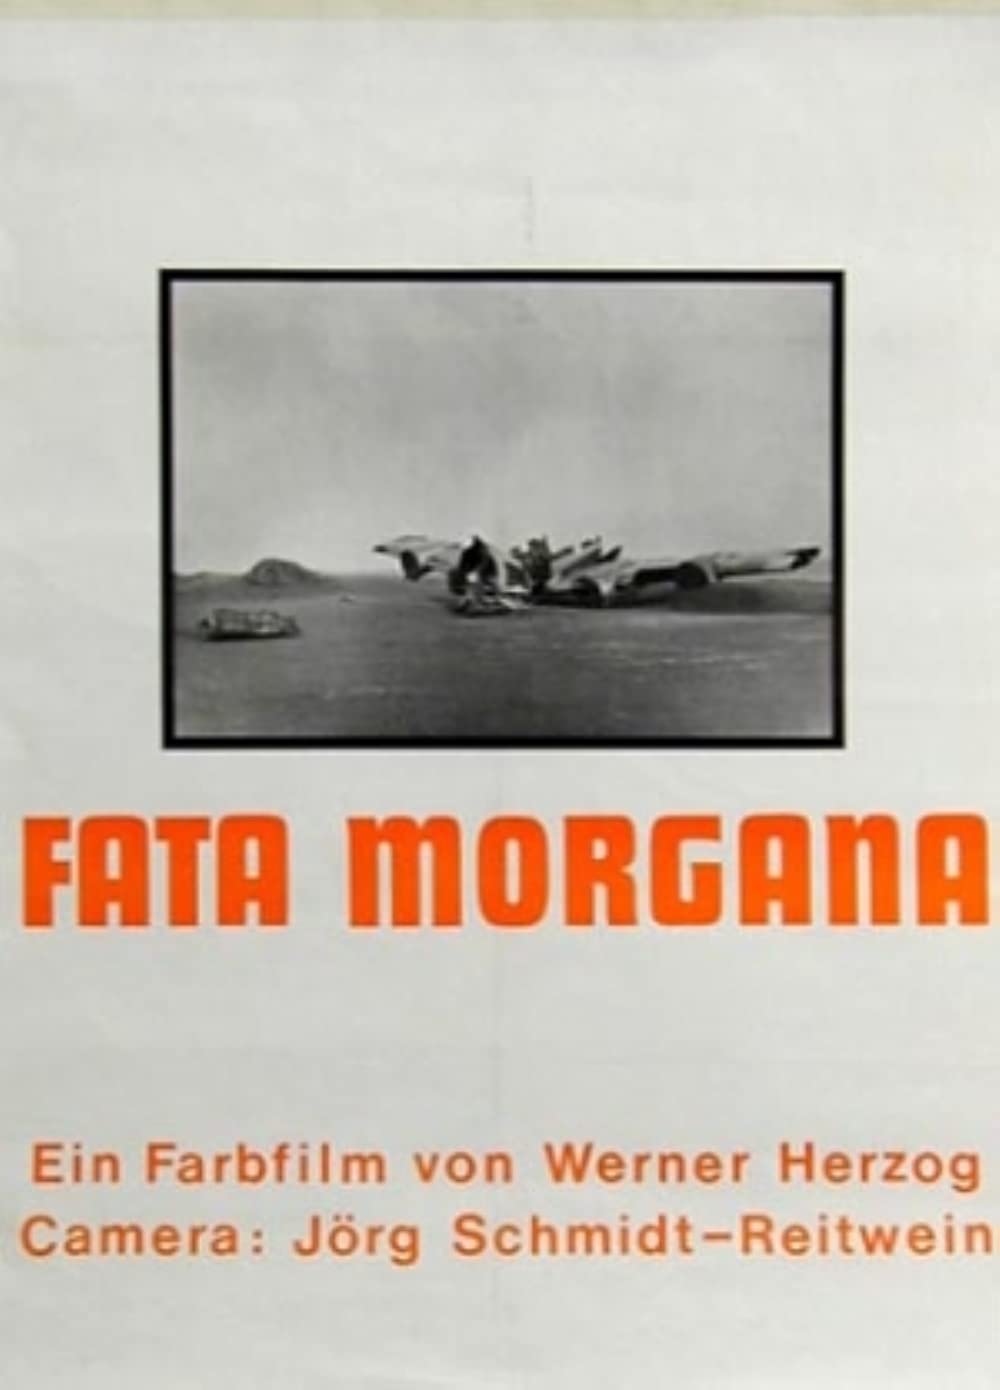 Filmbeschreibung zu Fata Morgana